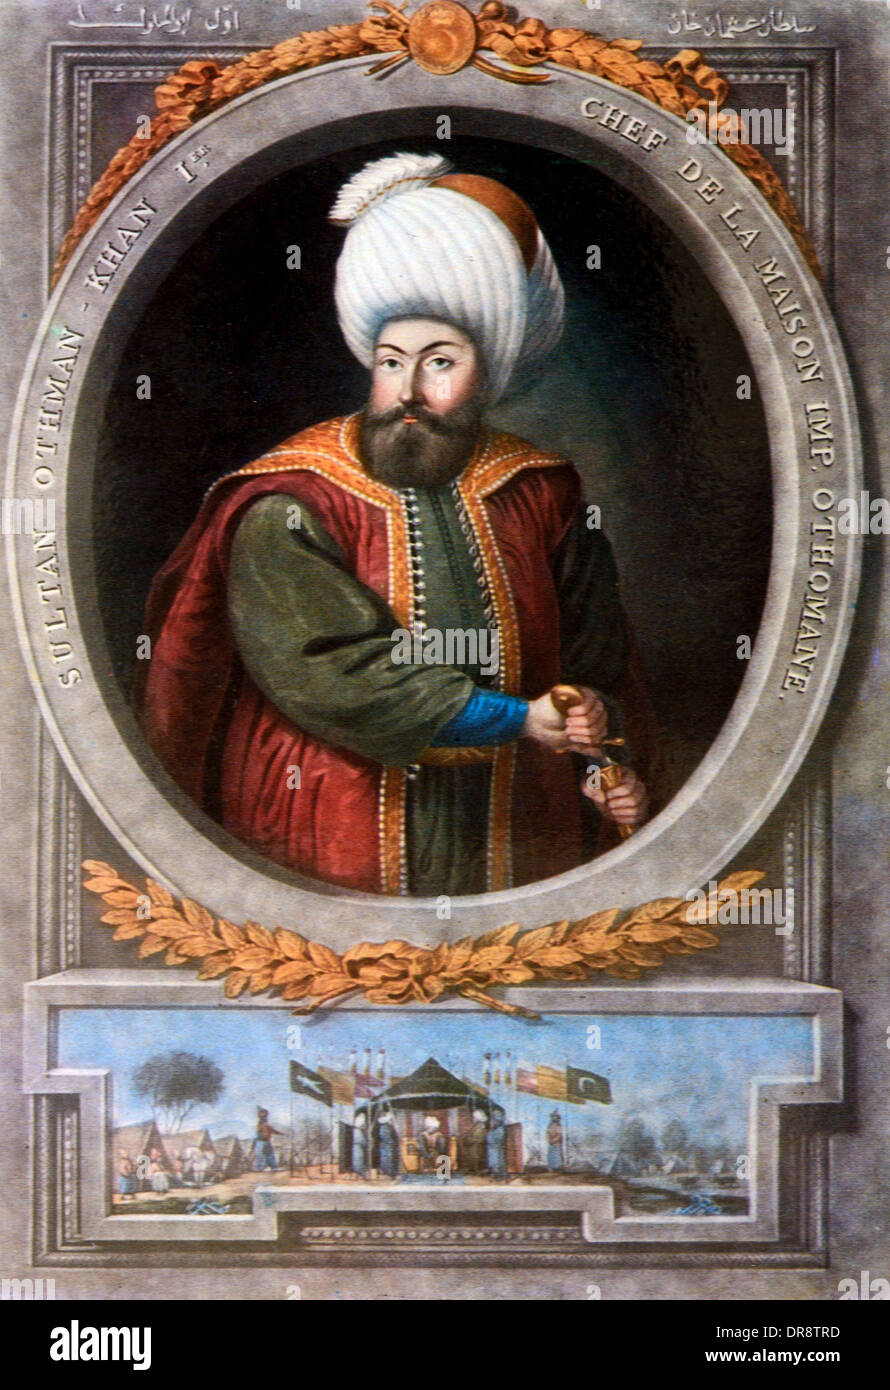 Ottoman Sultano Turco Osman I (1258-1326) Othman I o Osman Gazi ritratto dipinto Foto Stock